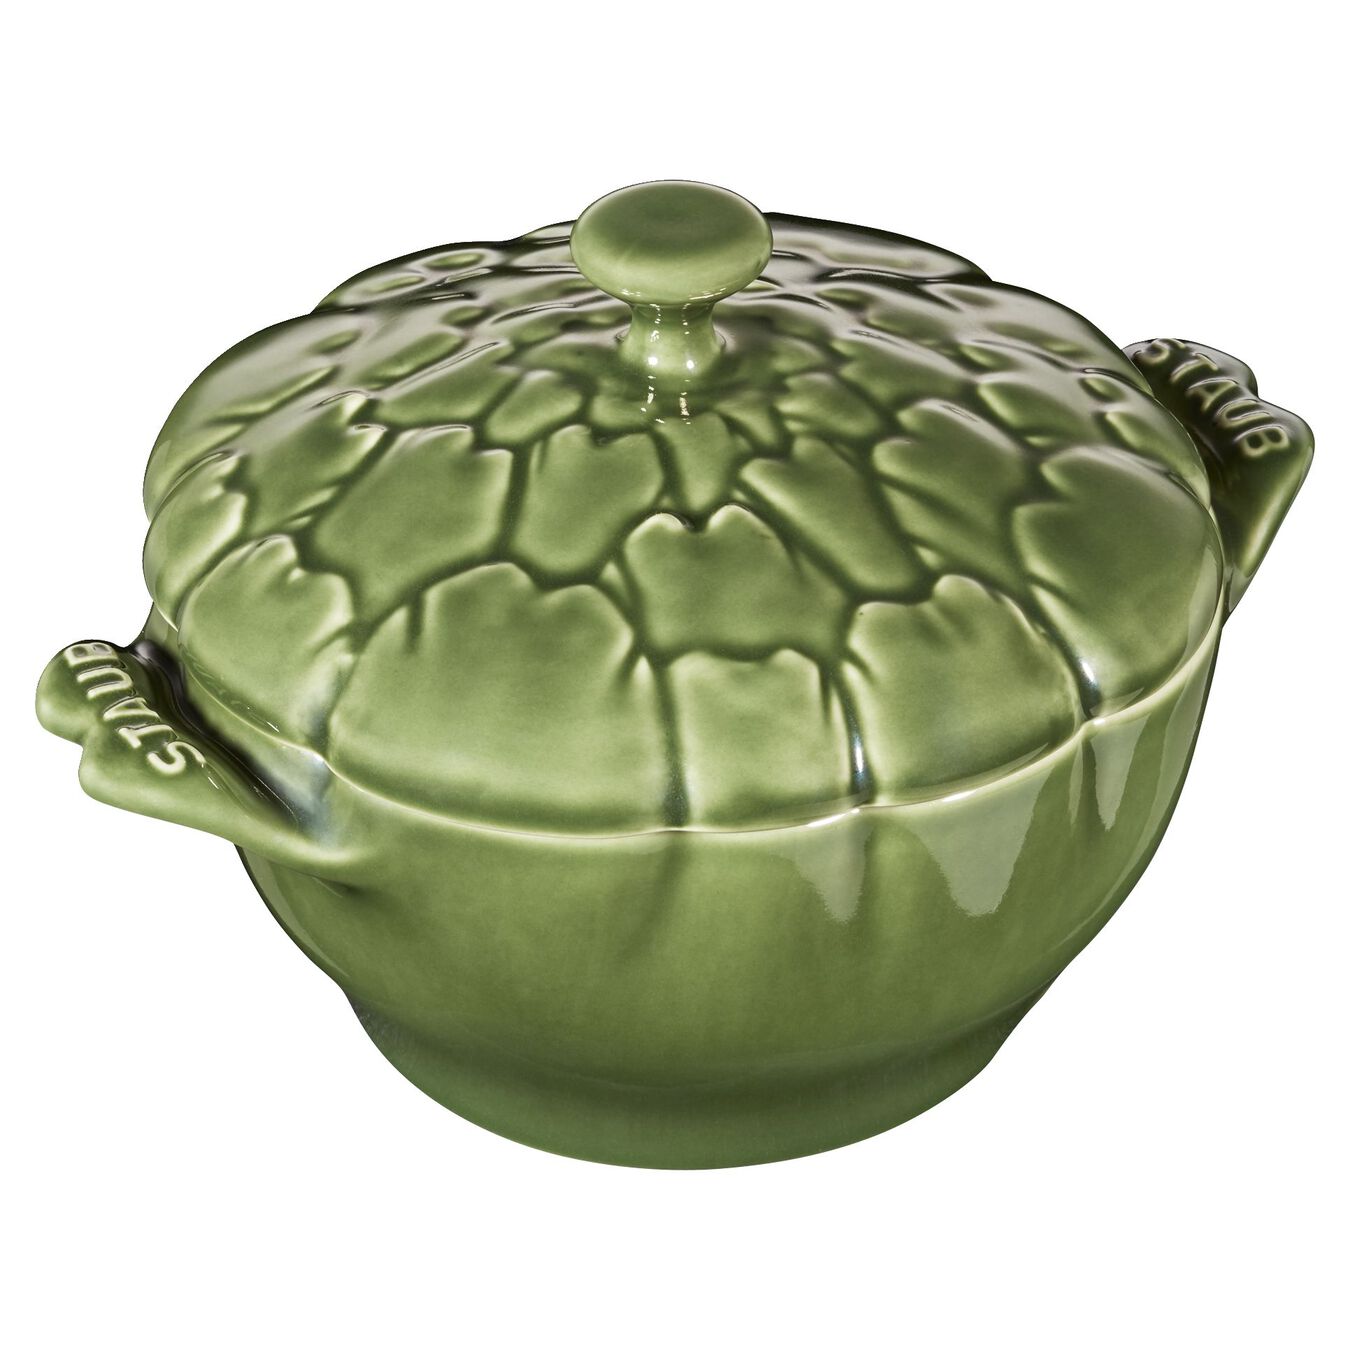 450 ml ceramic artichoke Cocotte, basil-green,,large 9